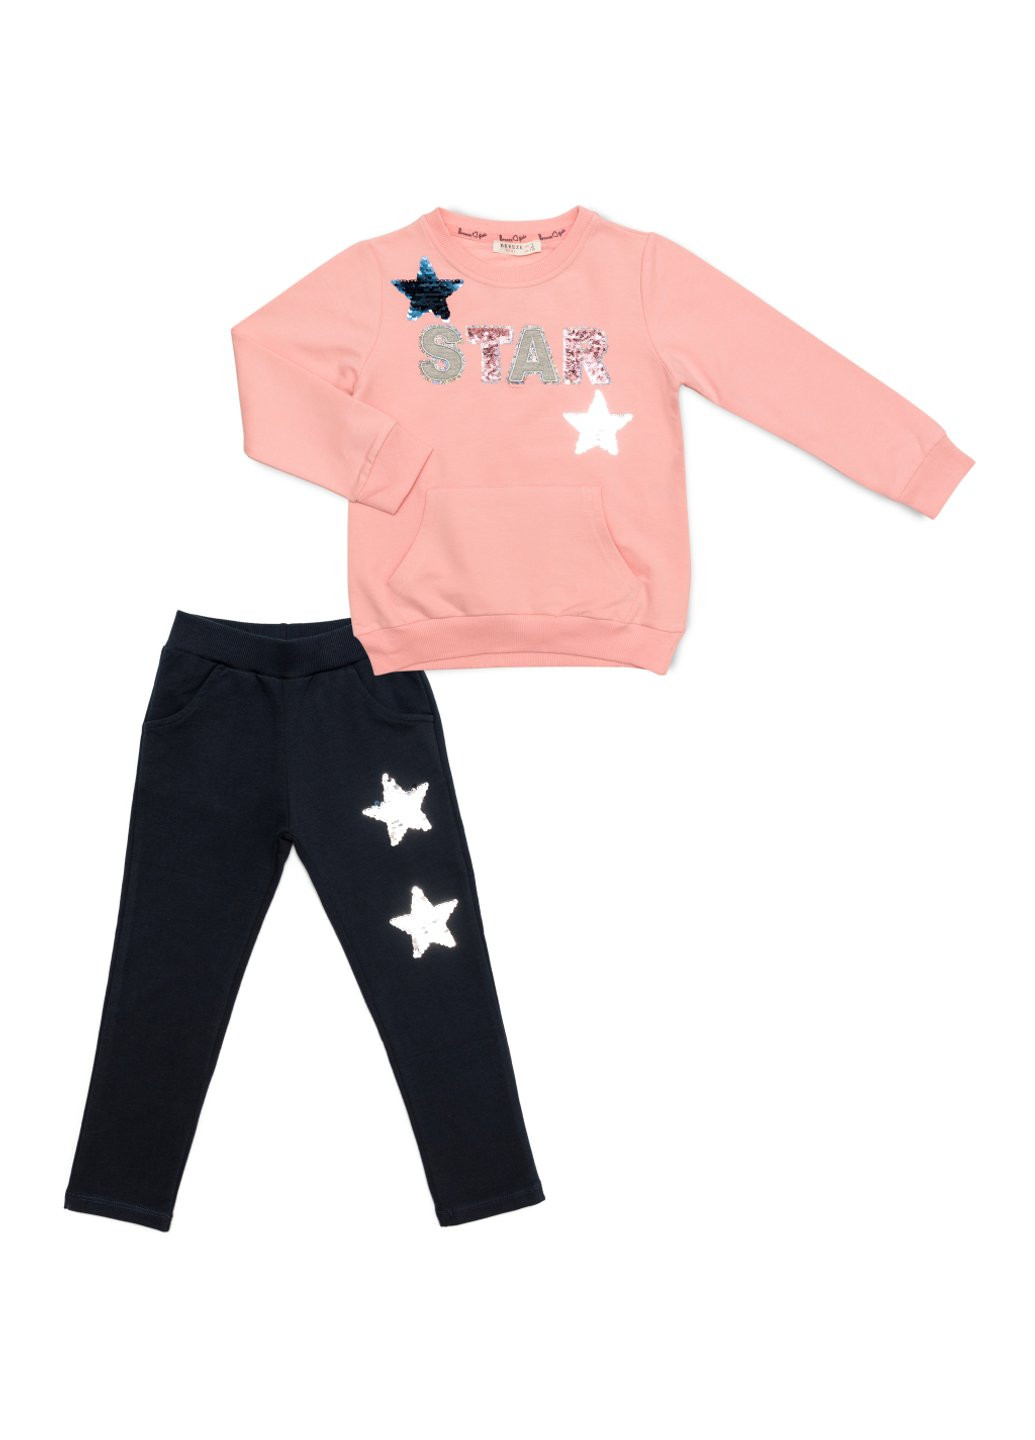 Спортивный костюм STAR (13727-128G-pink) Breeze (257142304)